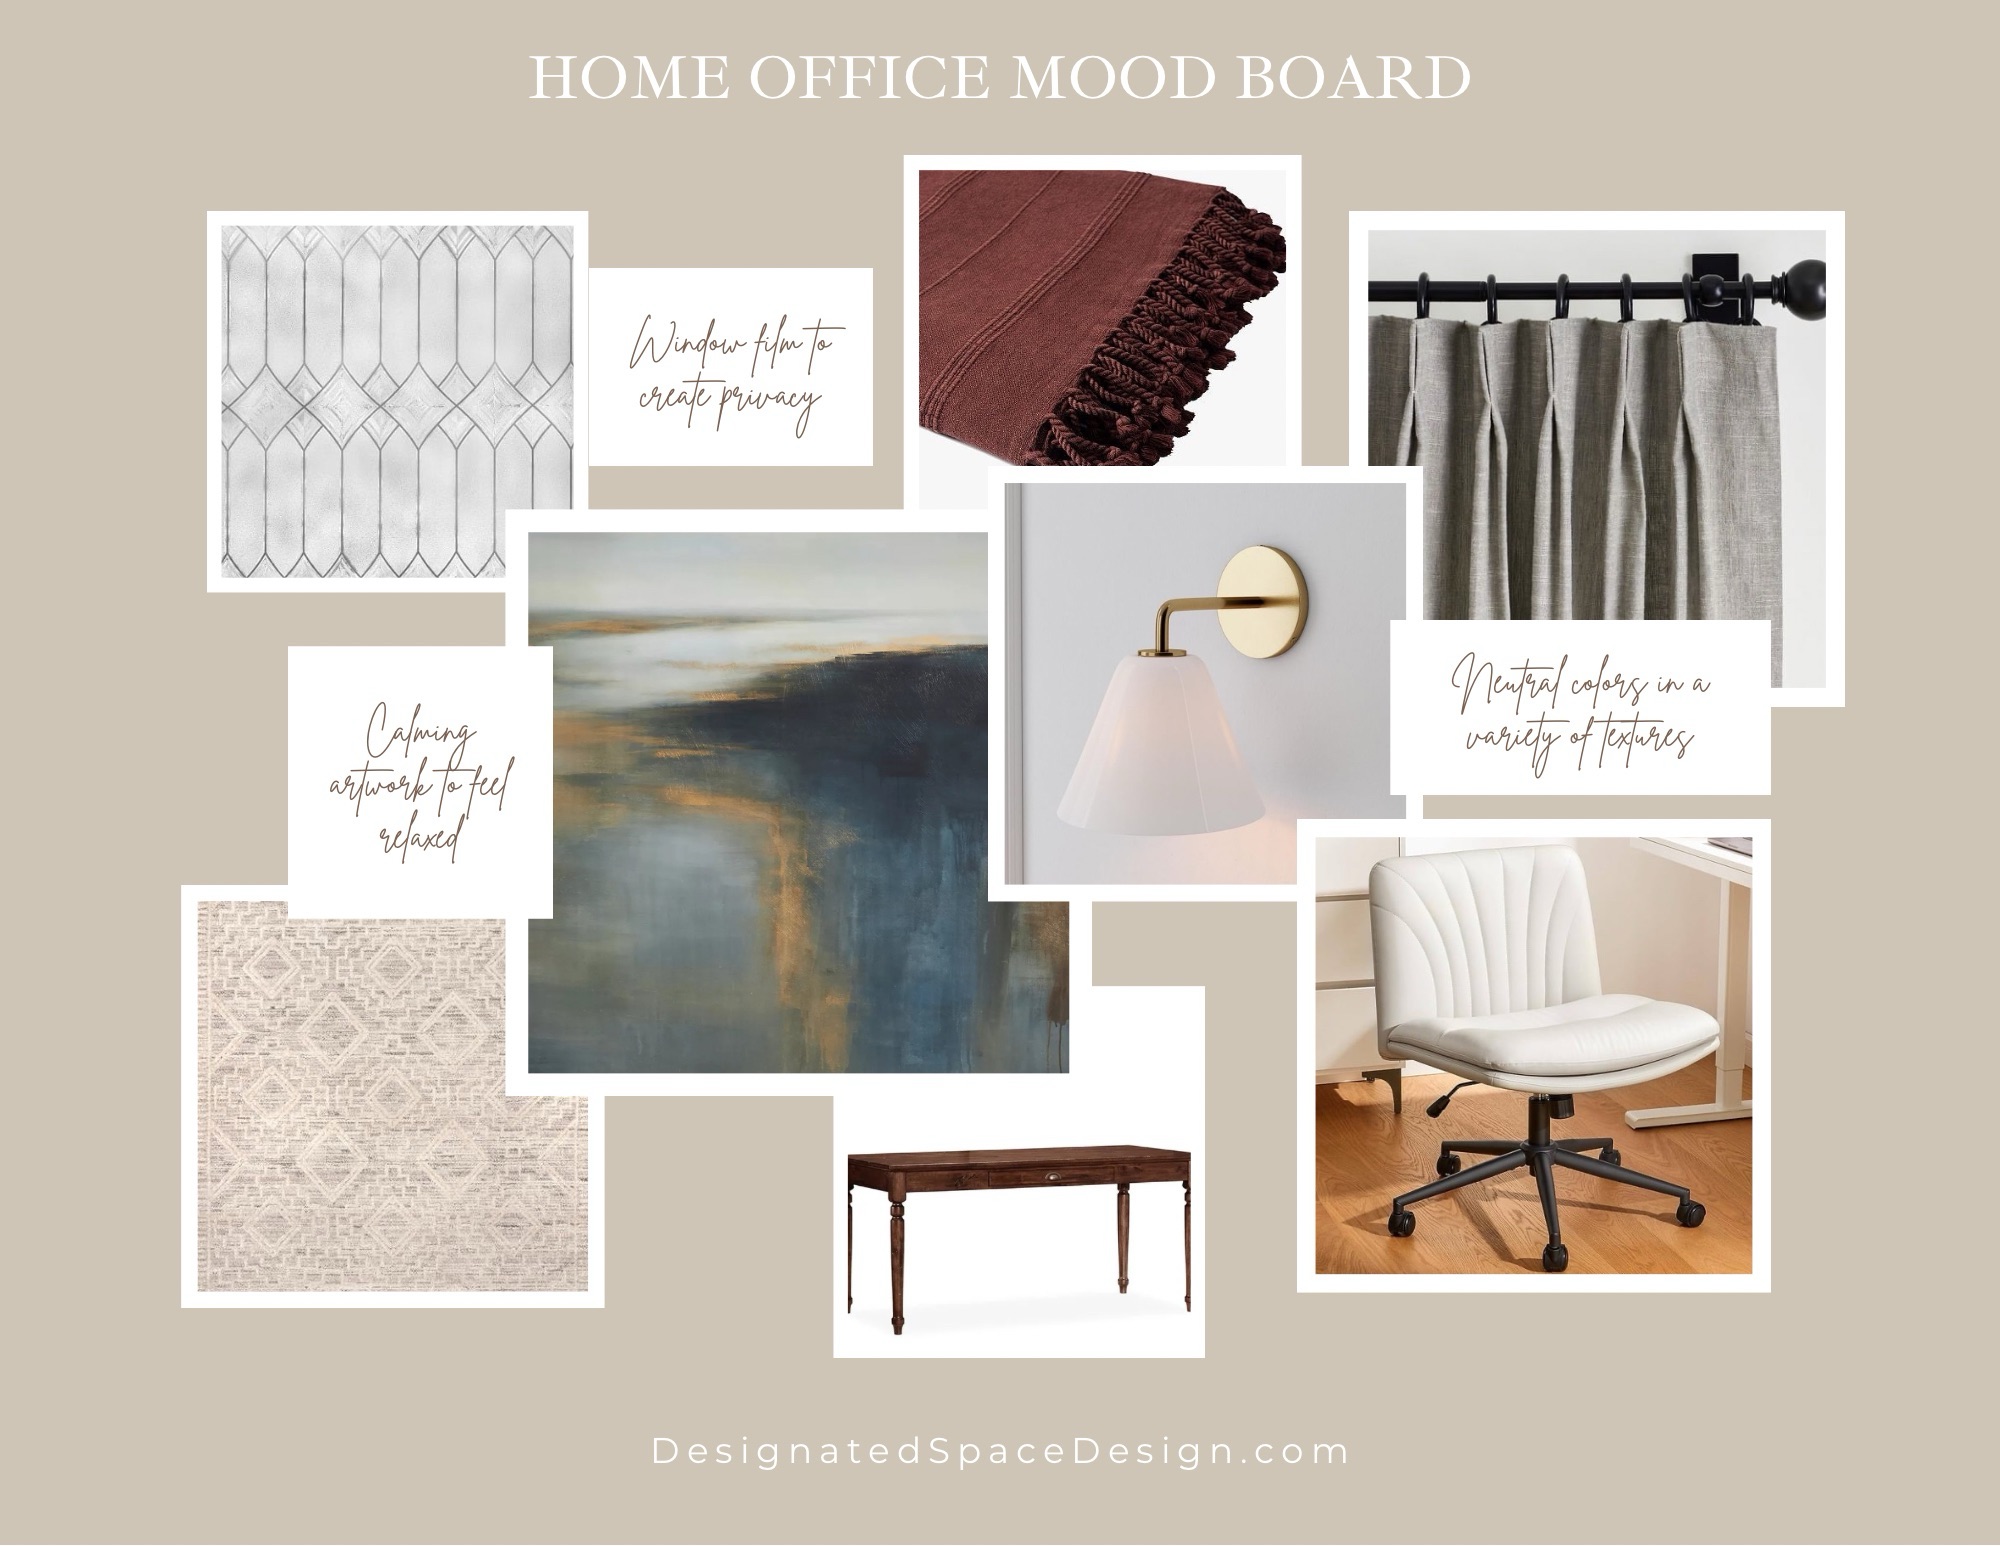 Designated Space Design Home office mood board